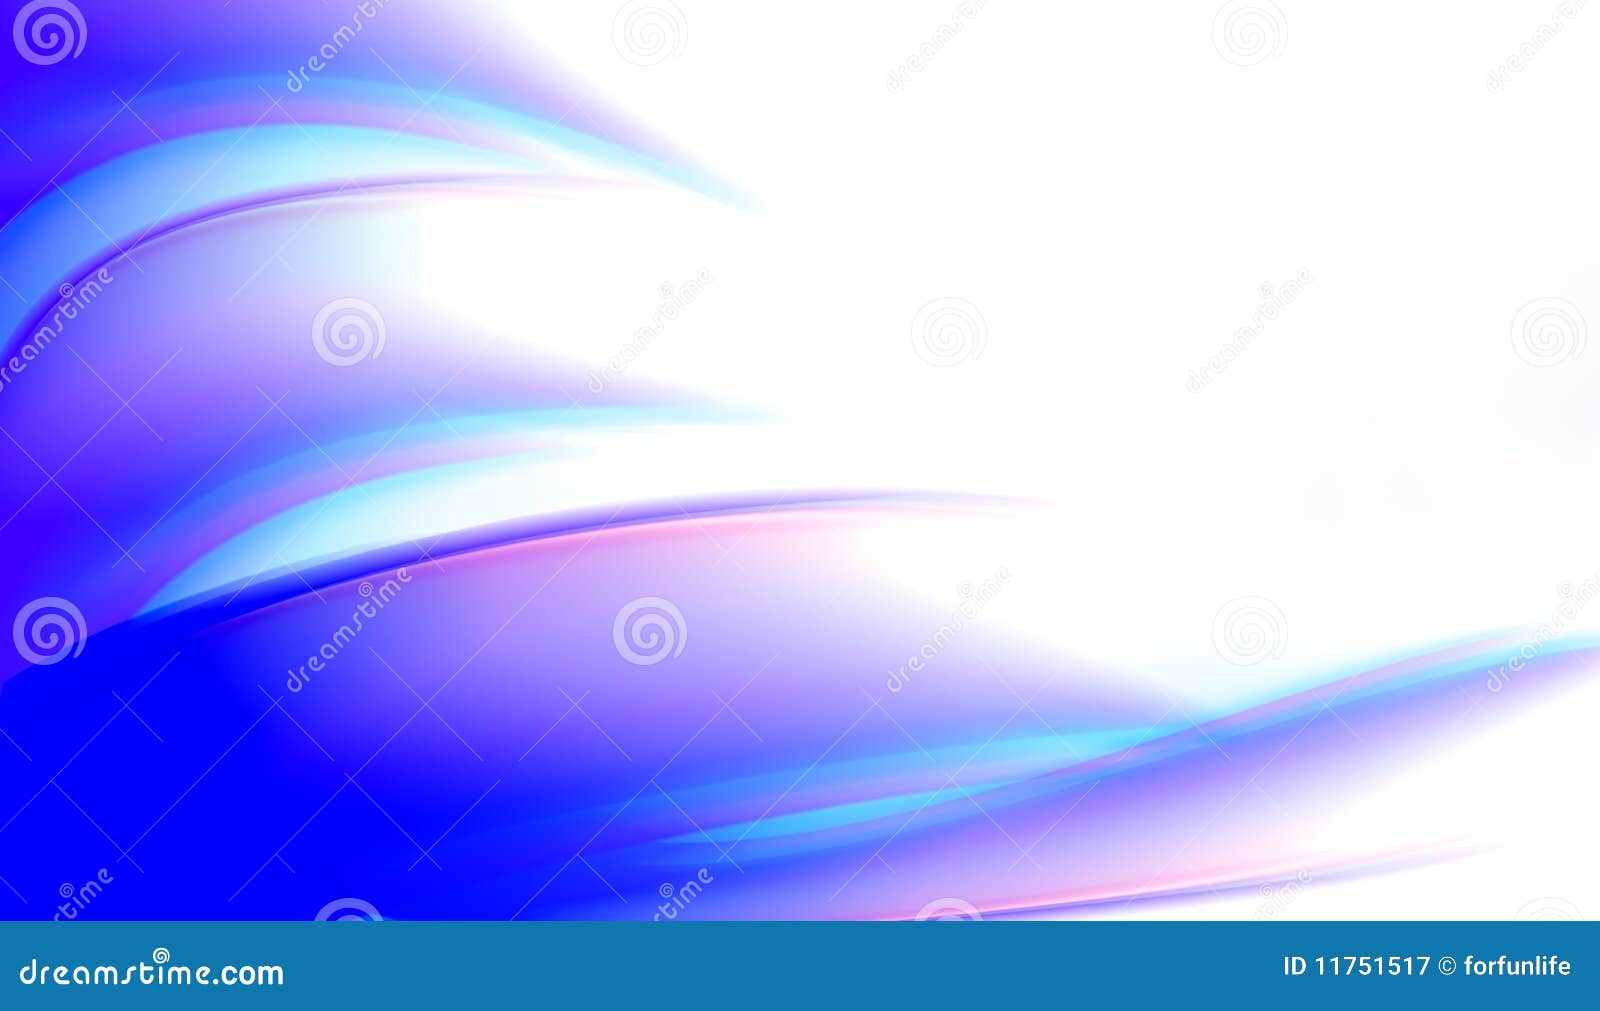 Blur background stock illustration. Illustration of light - 11751517